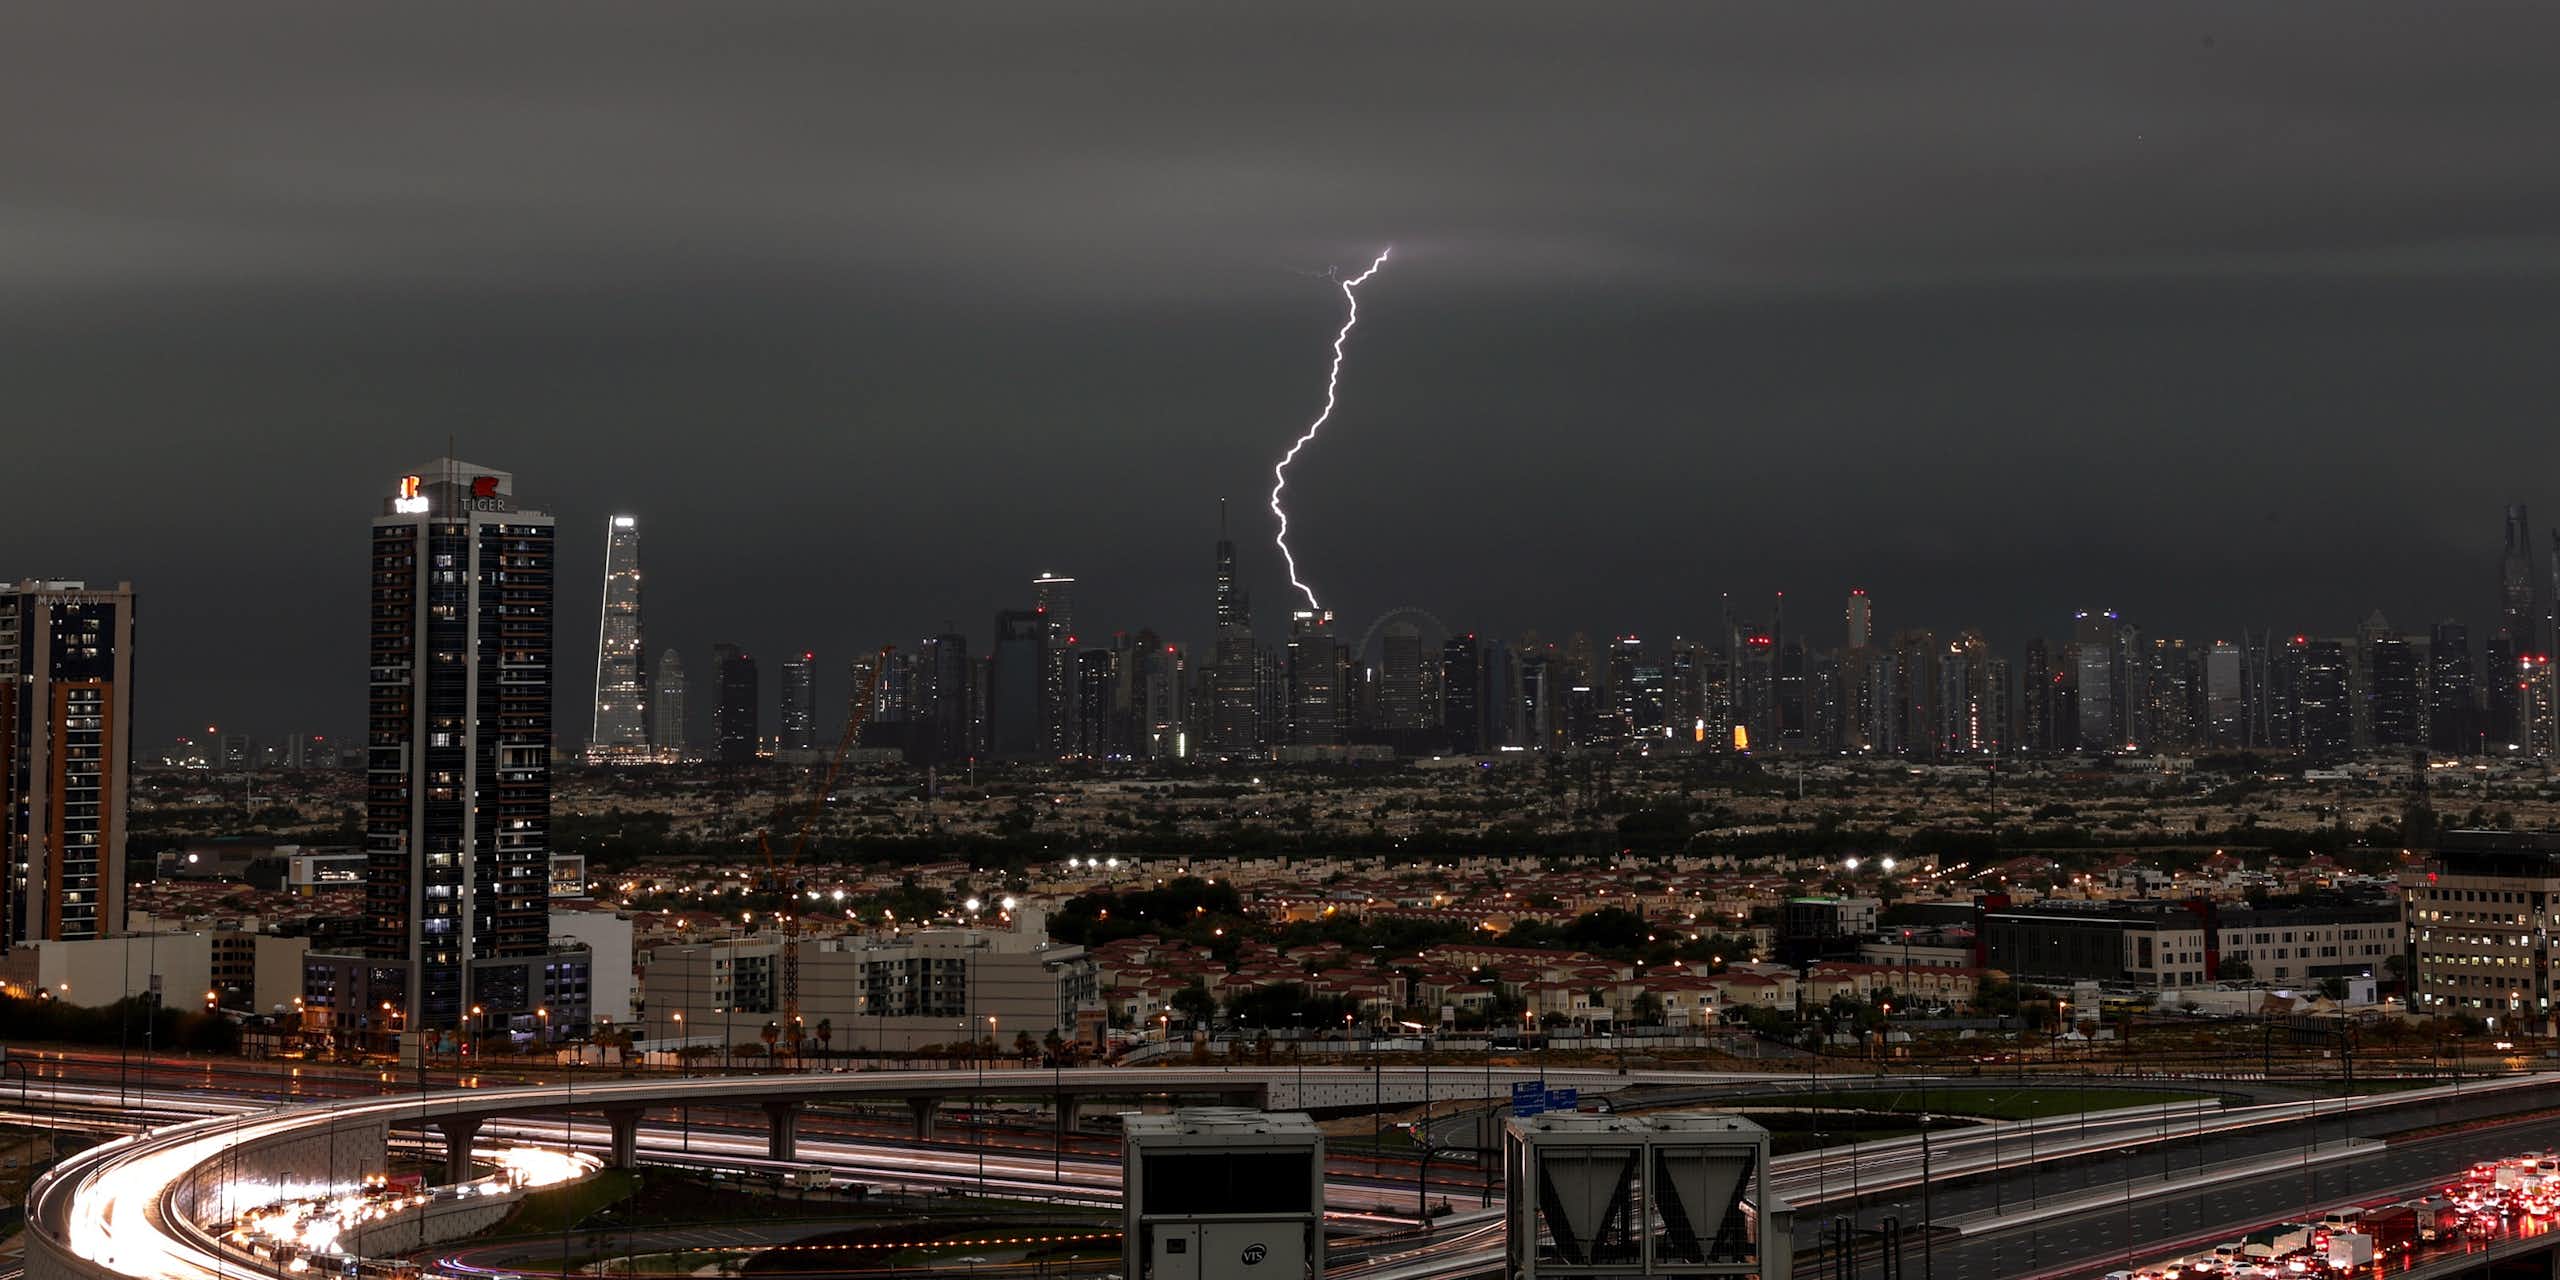 Lightning on skyline of large city